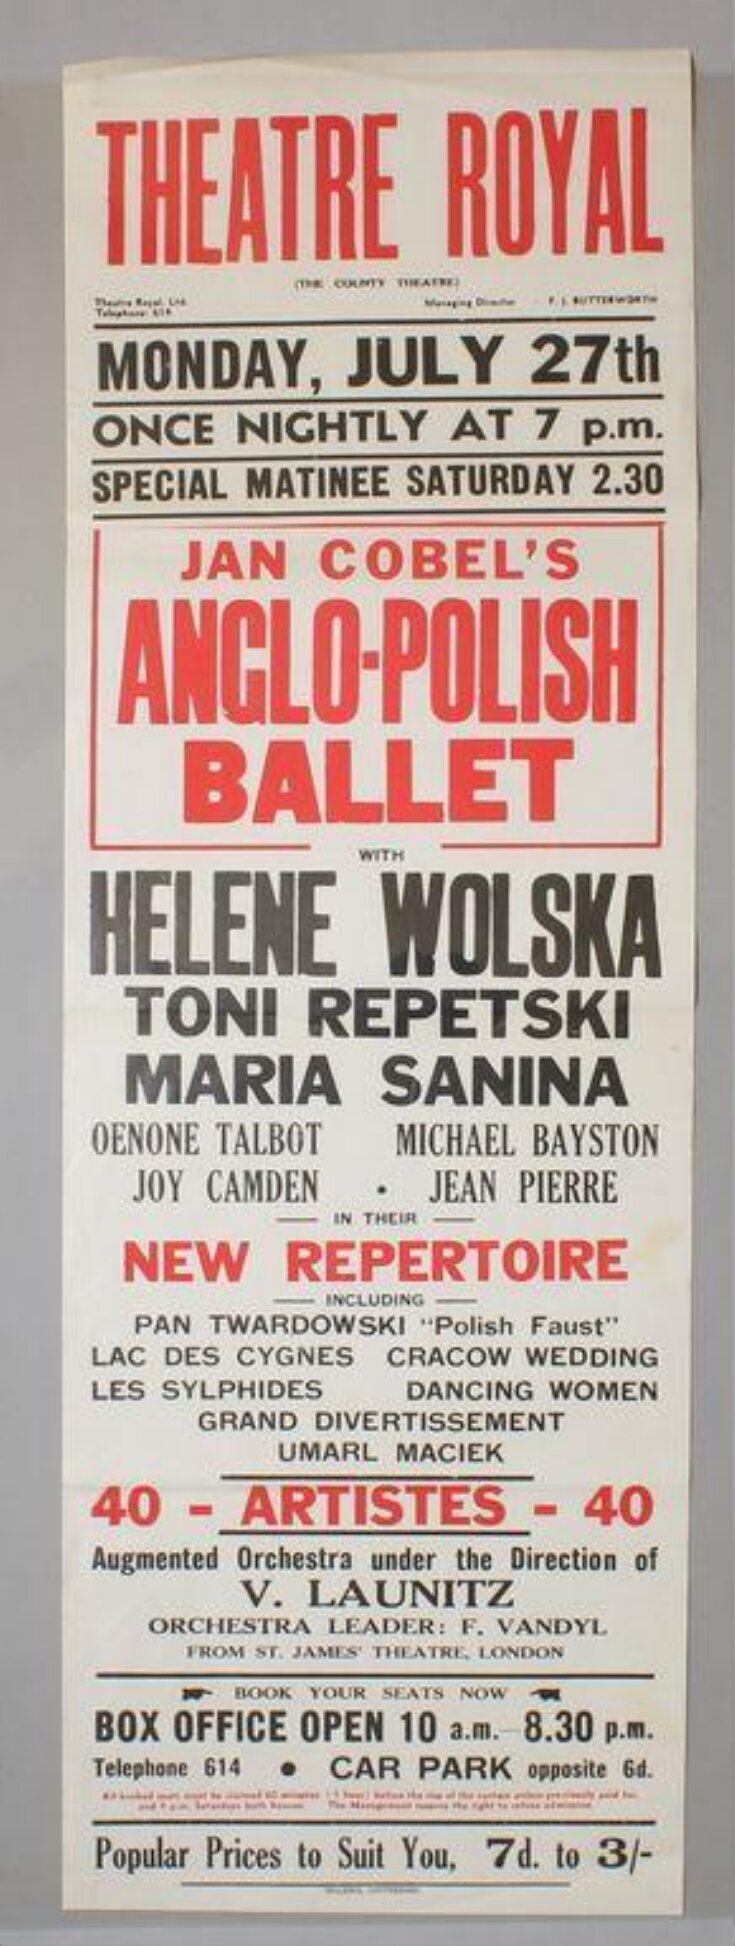 Jan Cobel’s Anglo-Polish Ballet top image